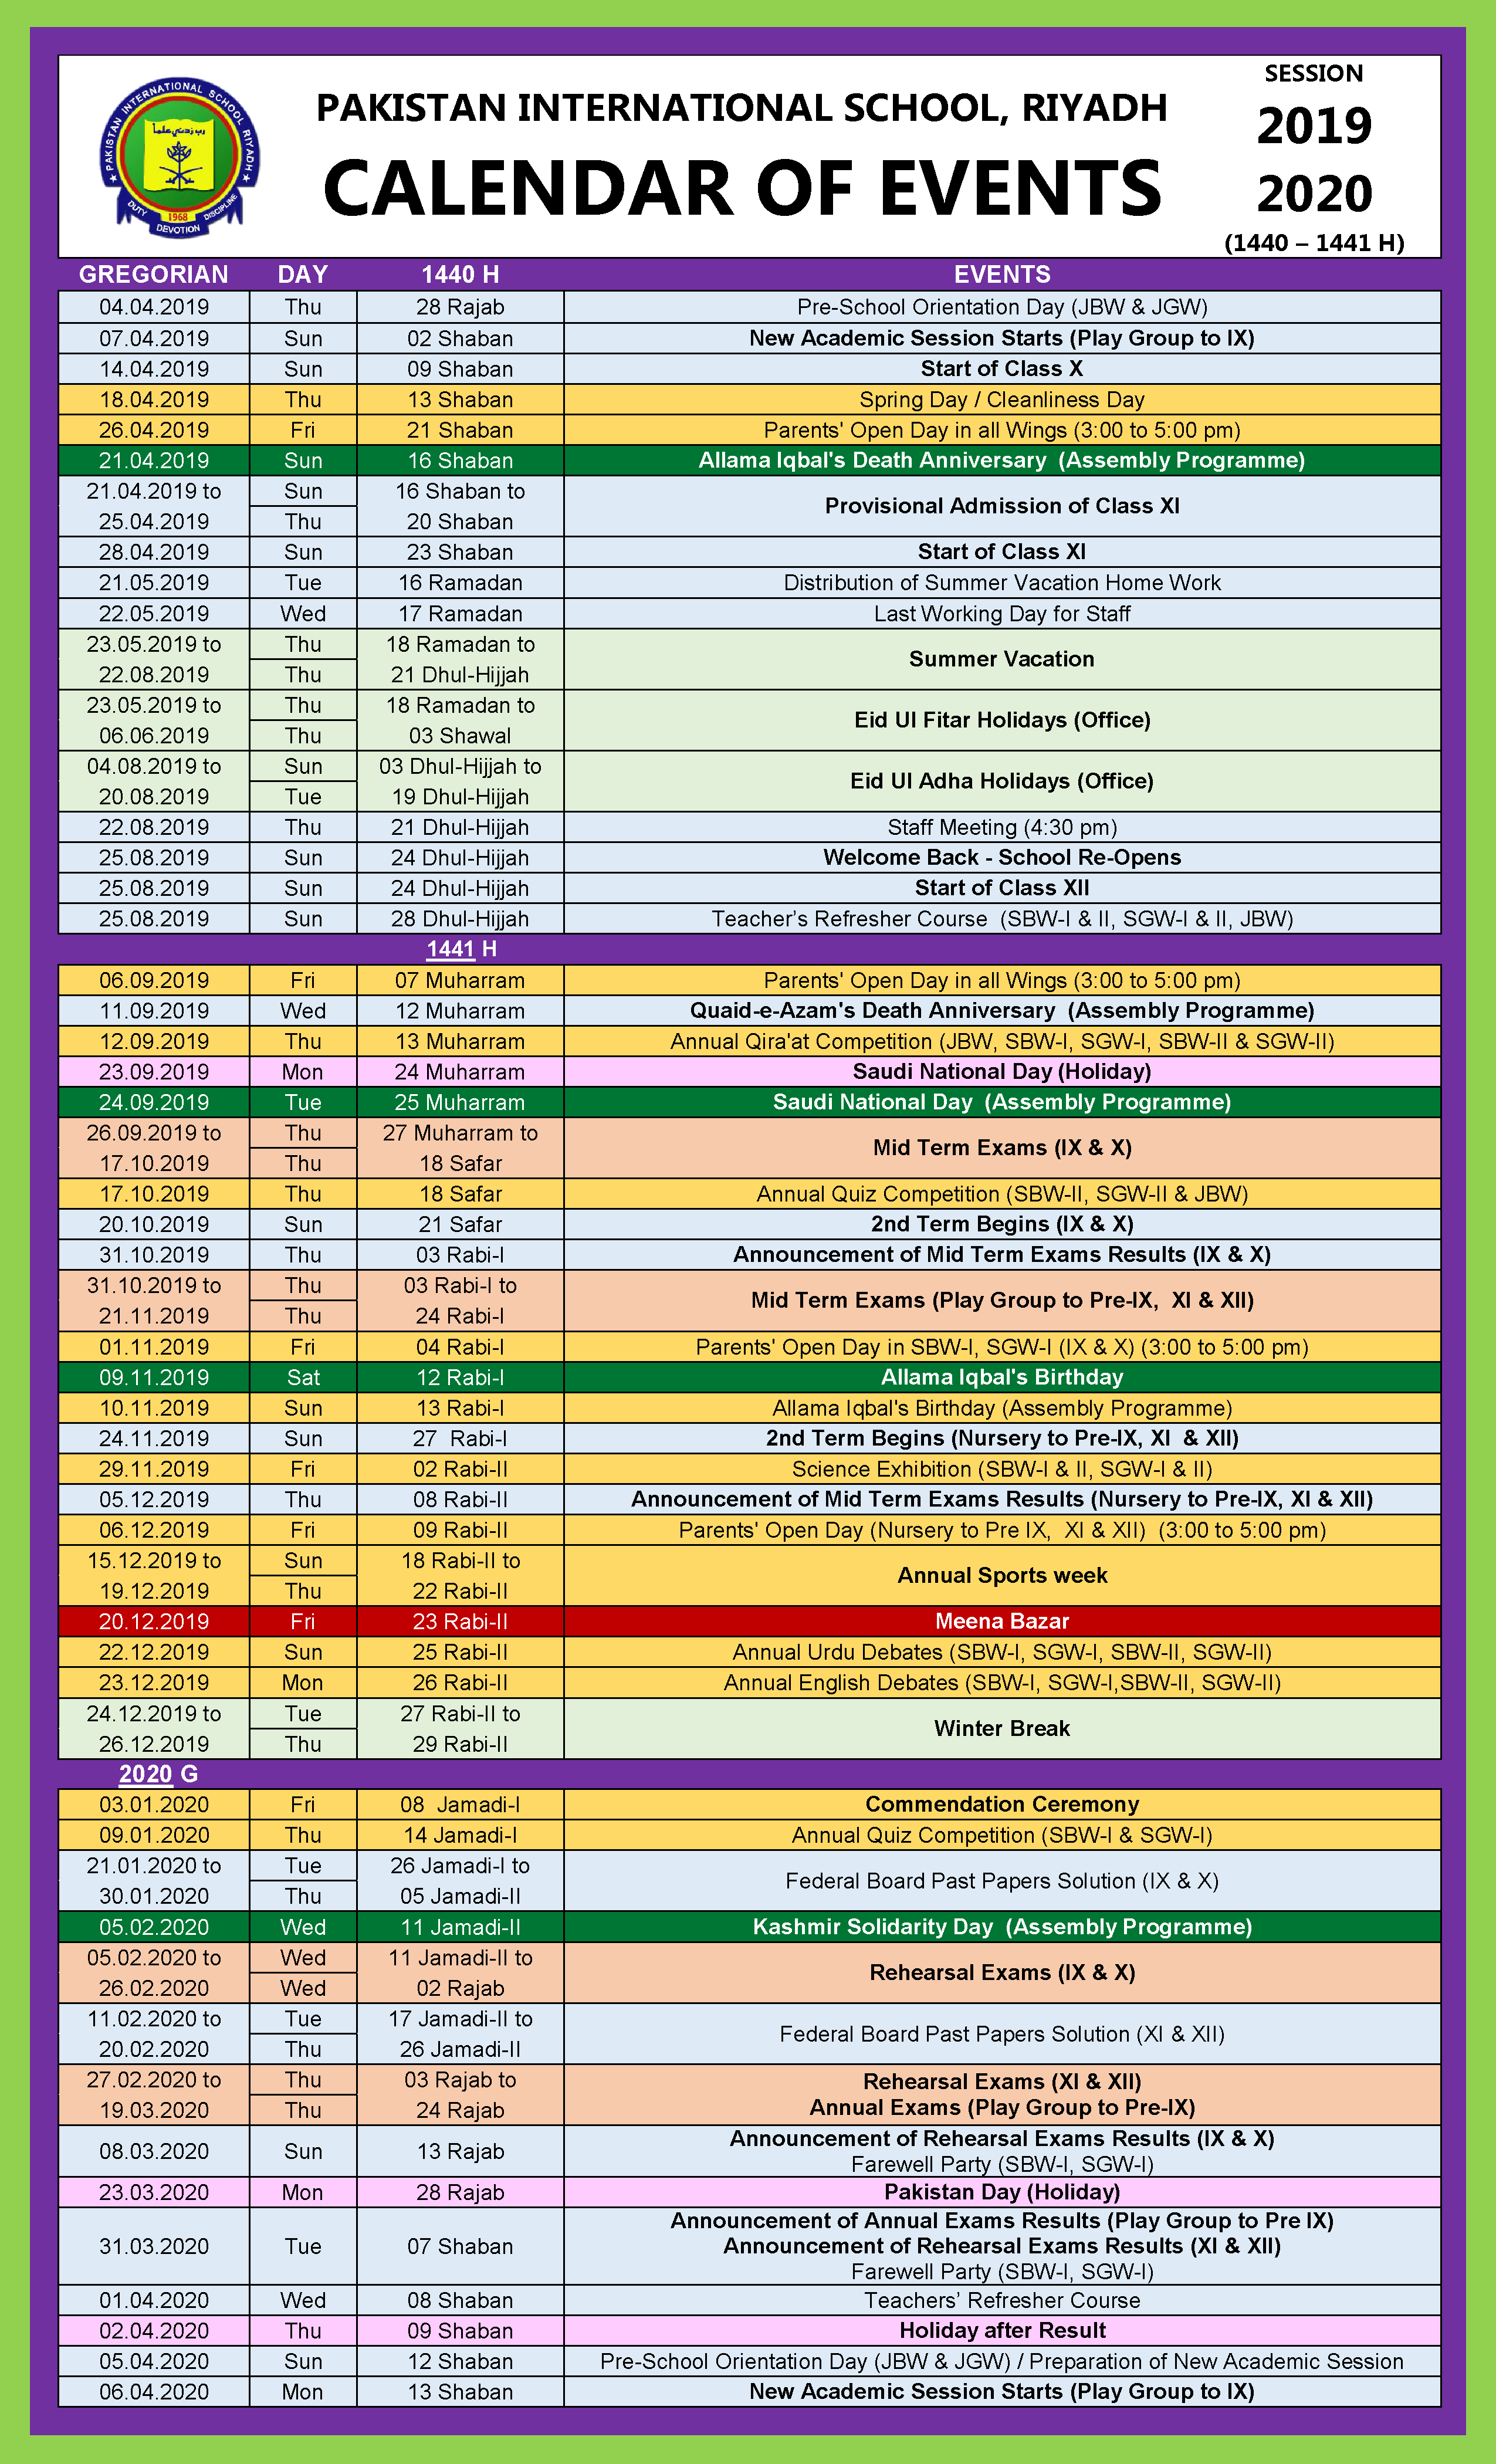 Academic Calendar Of Events (20192020) — Pakistan regarding H International School Calendar